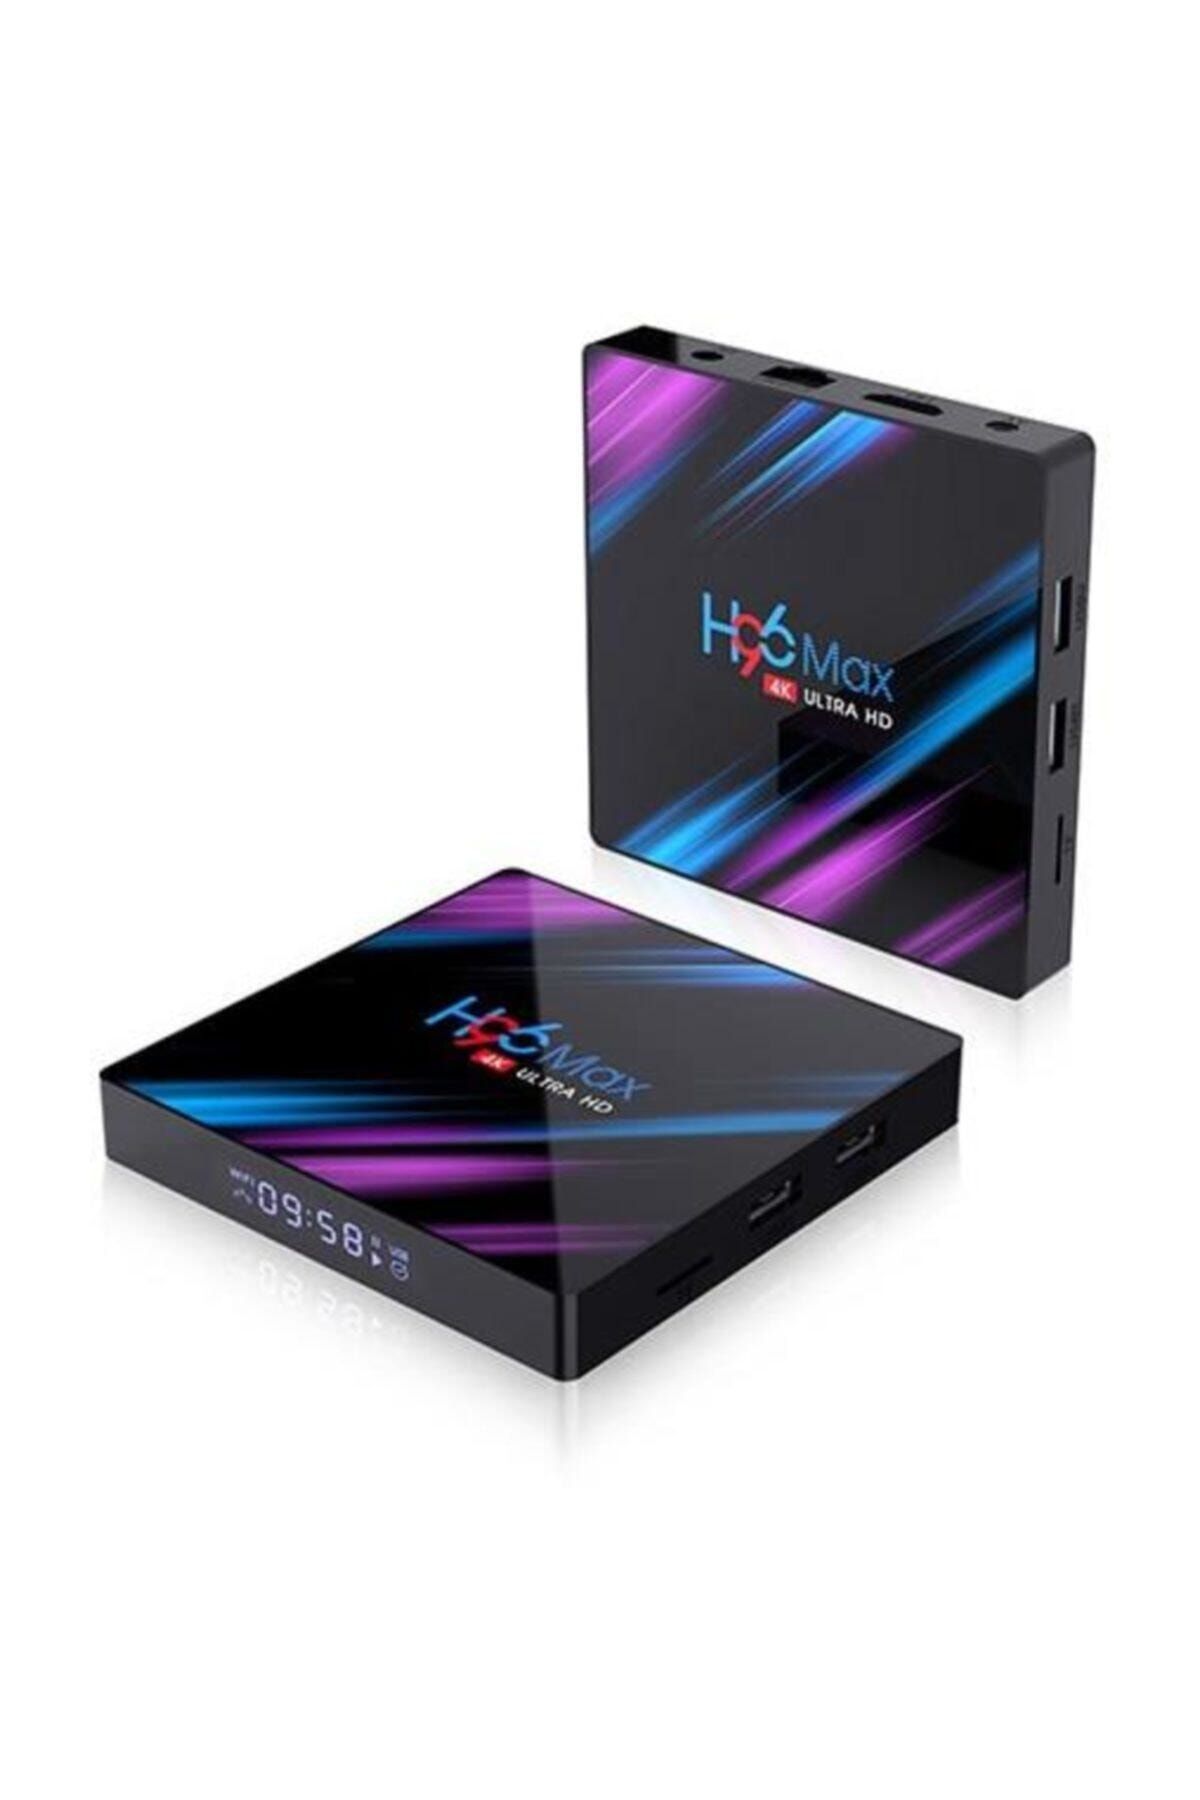 Gomax H96 Max 4k Android TV Box 4 GB Ram 32 GB Rom